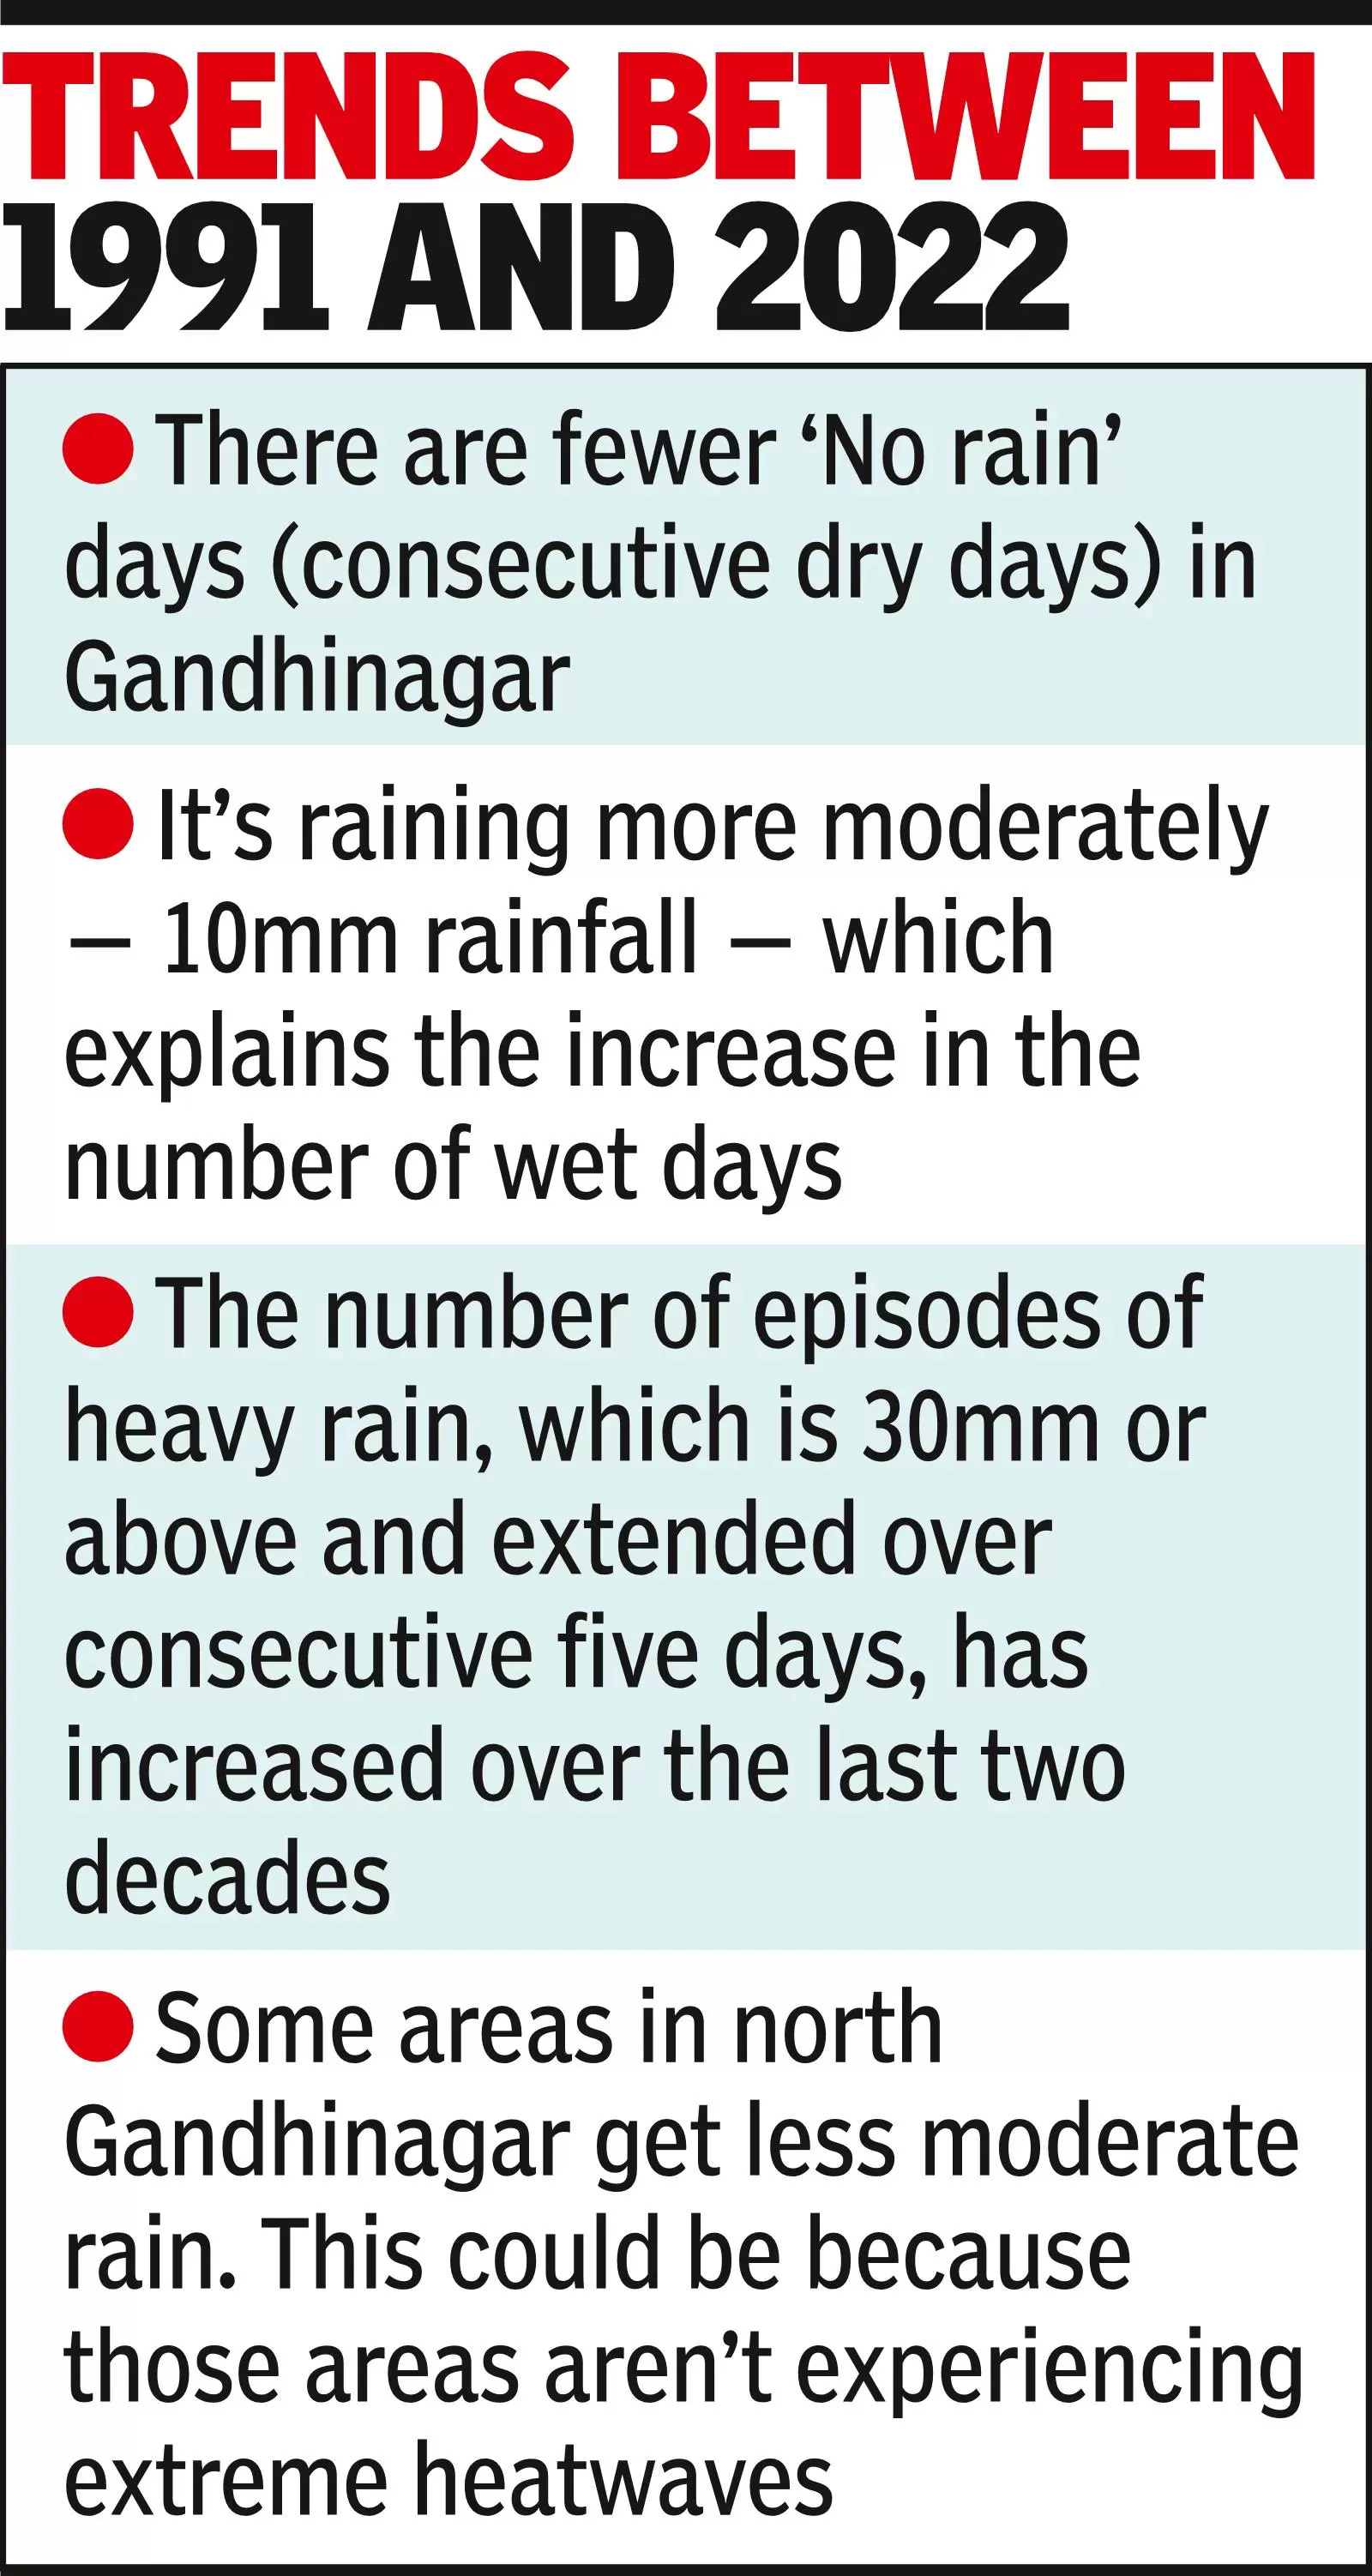 Erratic rainfalls set climate clock ticking for G’nagar